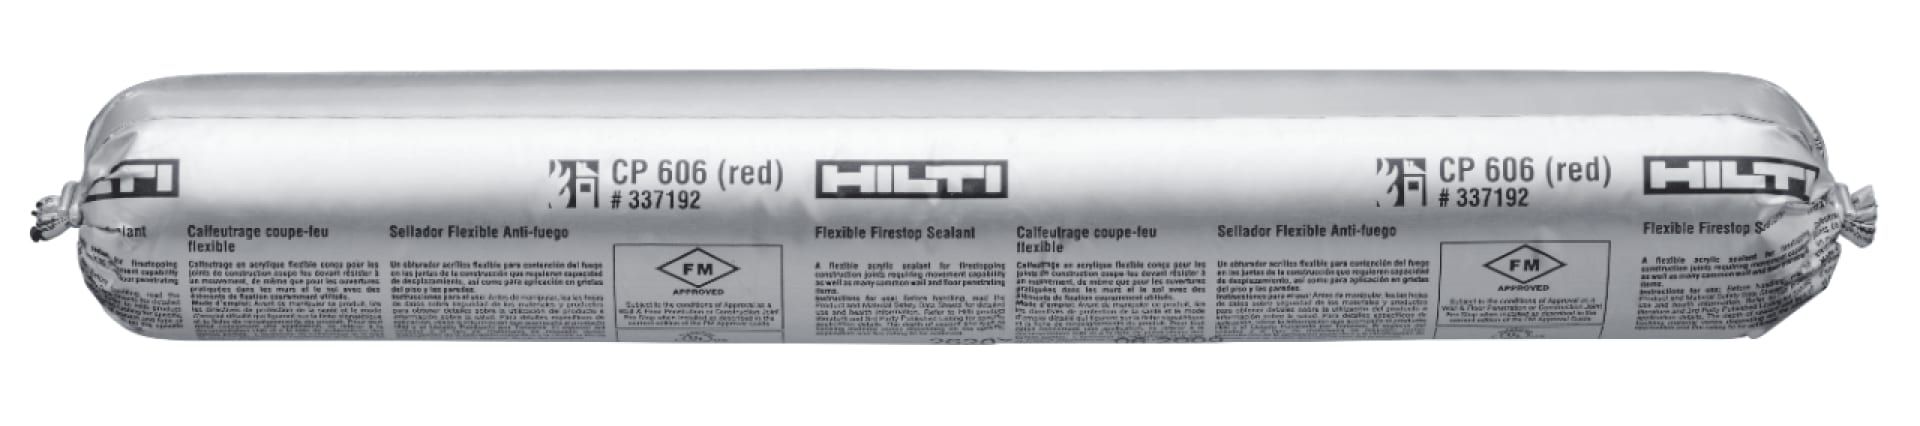 Hilti Firestop Acrylic Sealant CP606